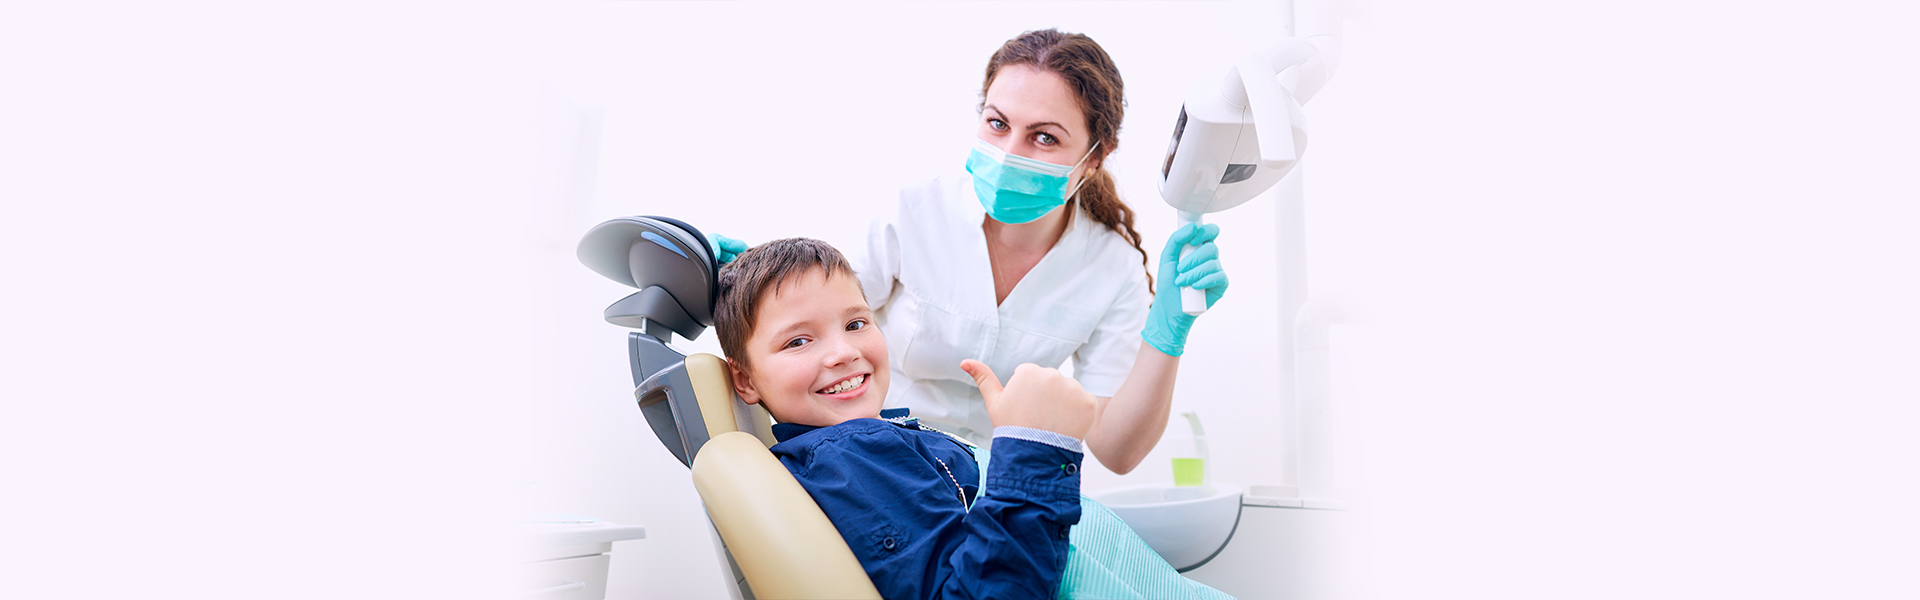 Pediatric Dentistry: A Guide to Children's Dental Health